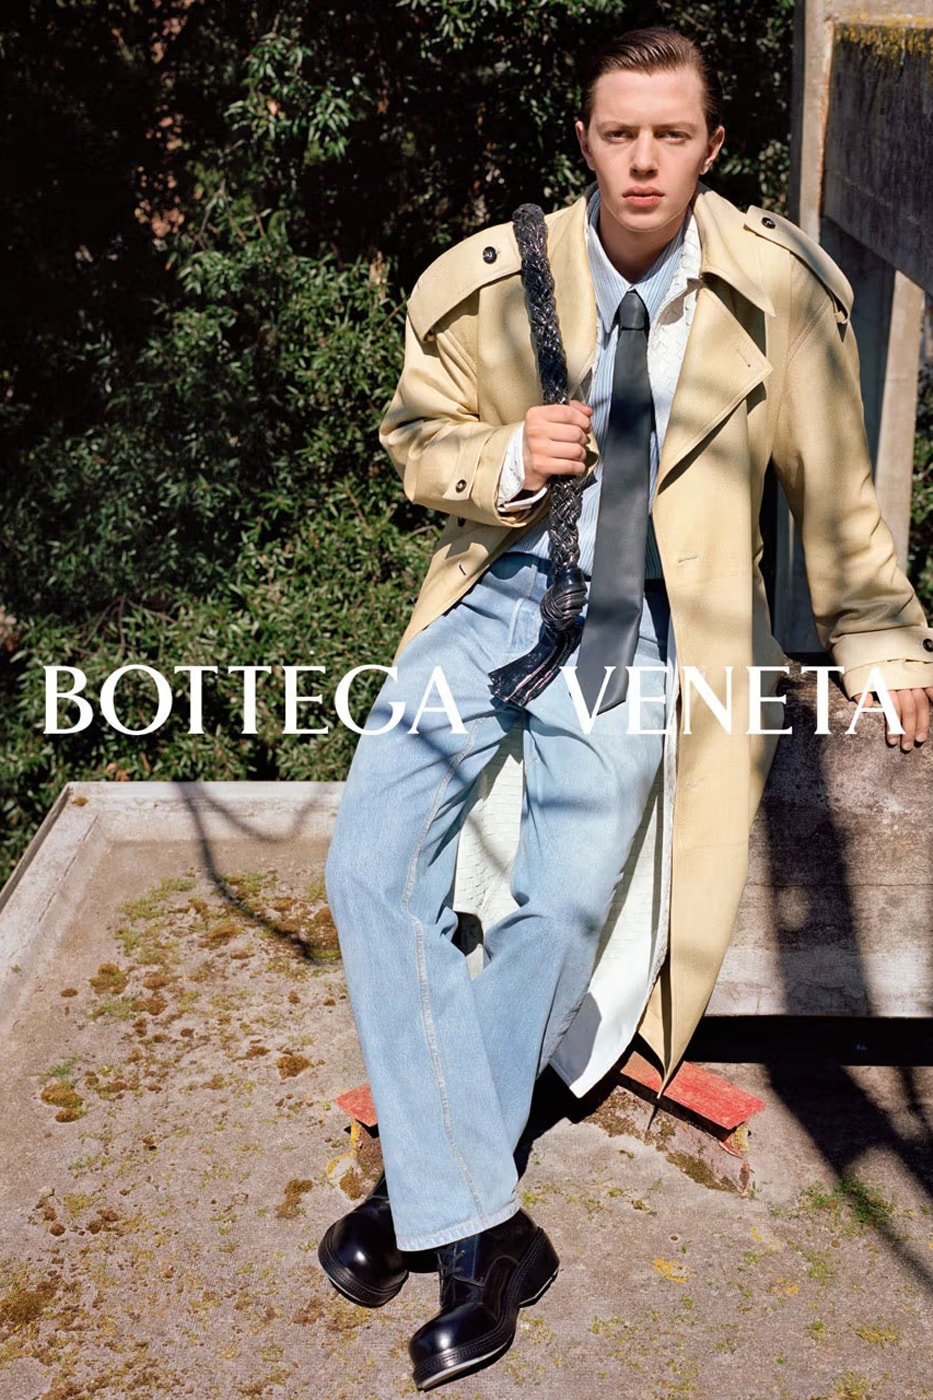 Bottega Veneta Fall Winter 2022-23 Campaign